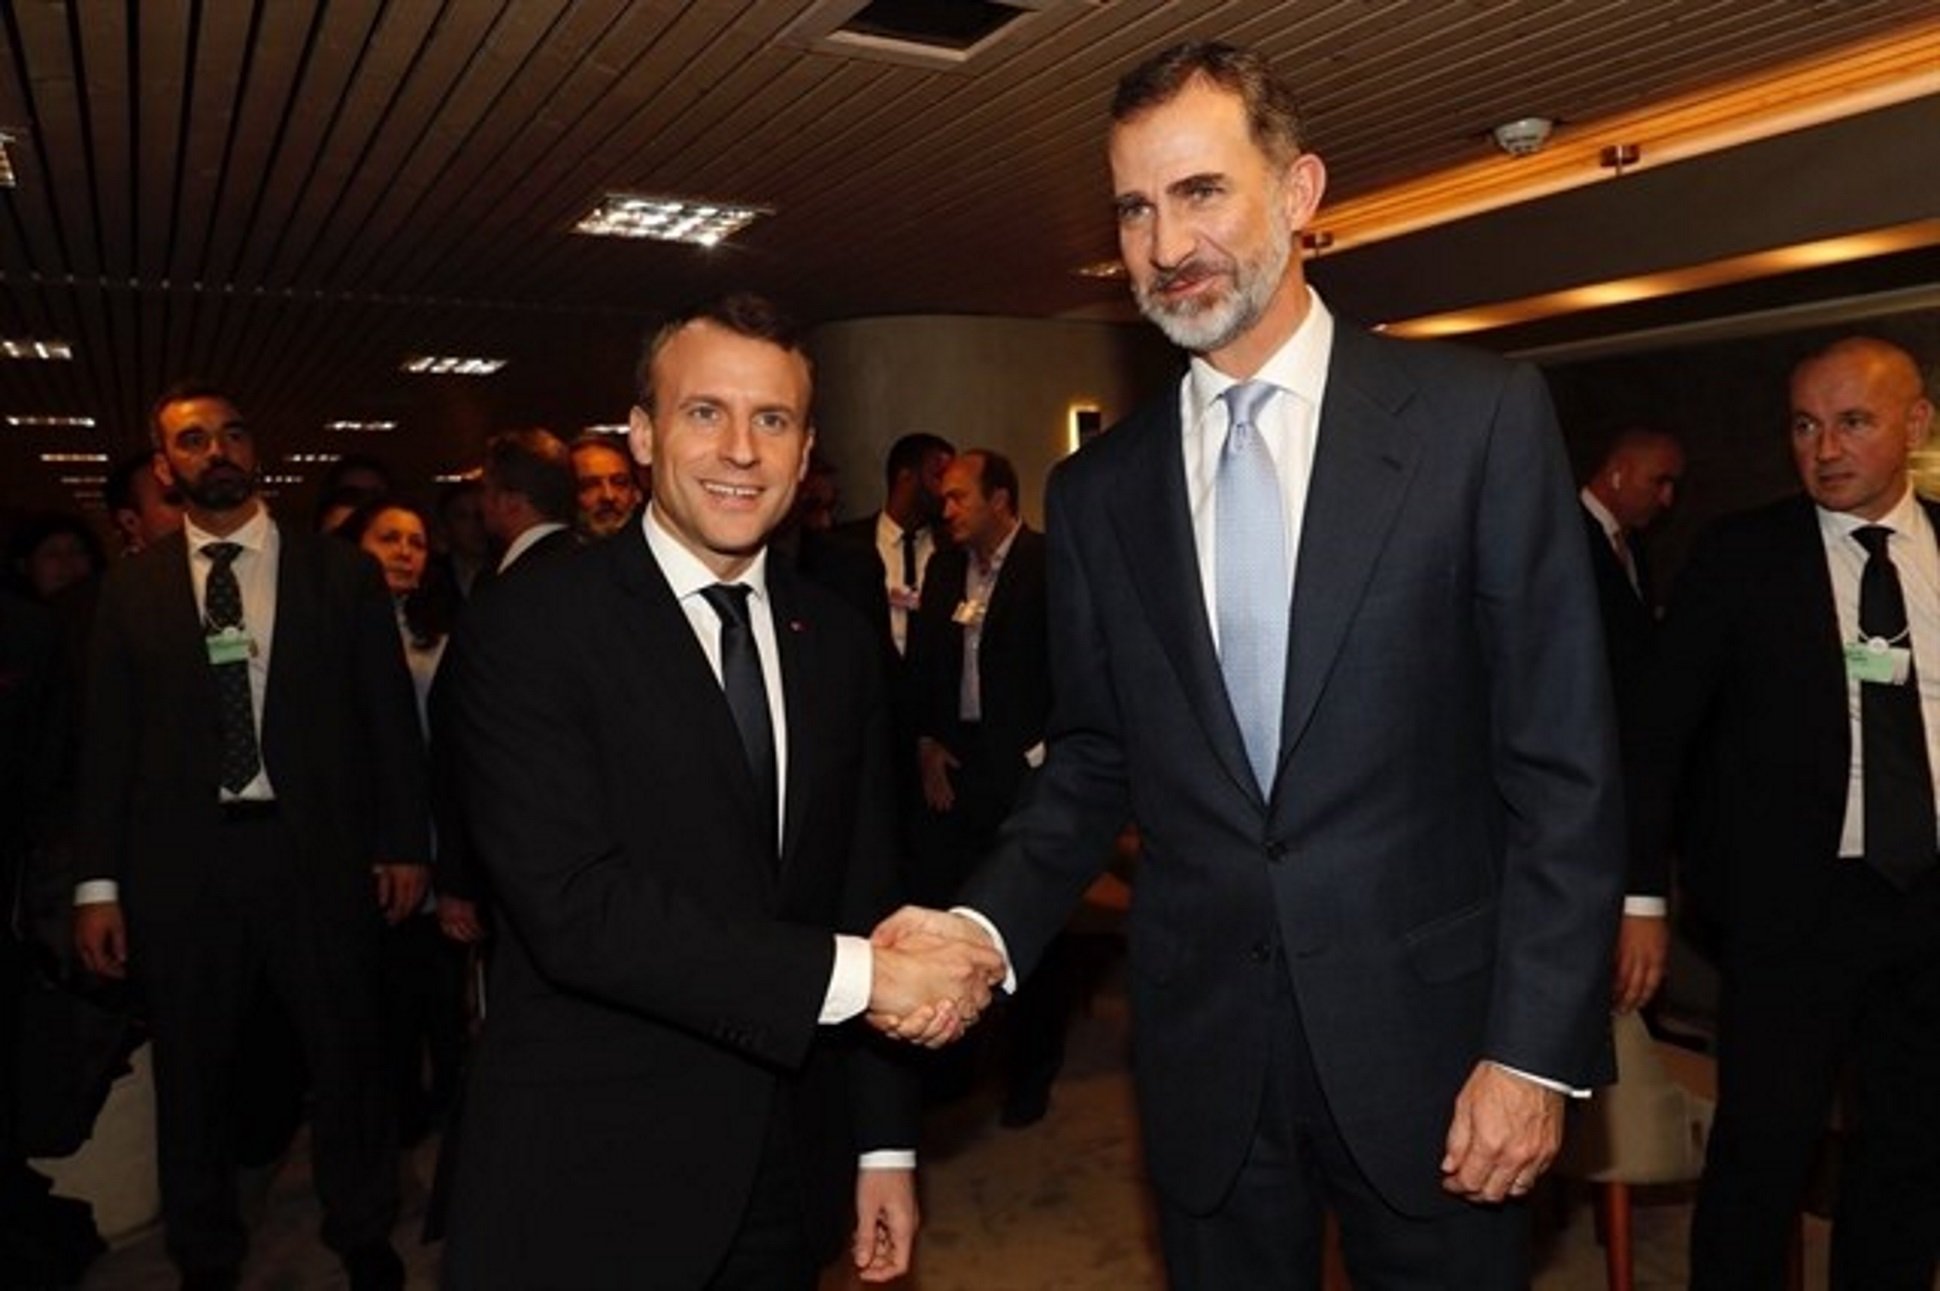 King Felipe VI and Macron spoke about Catalonia